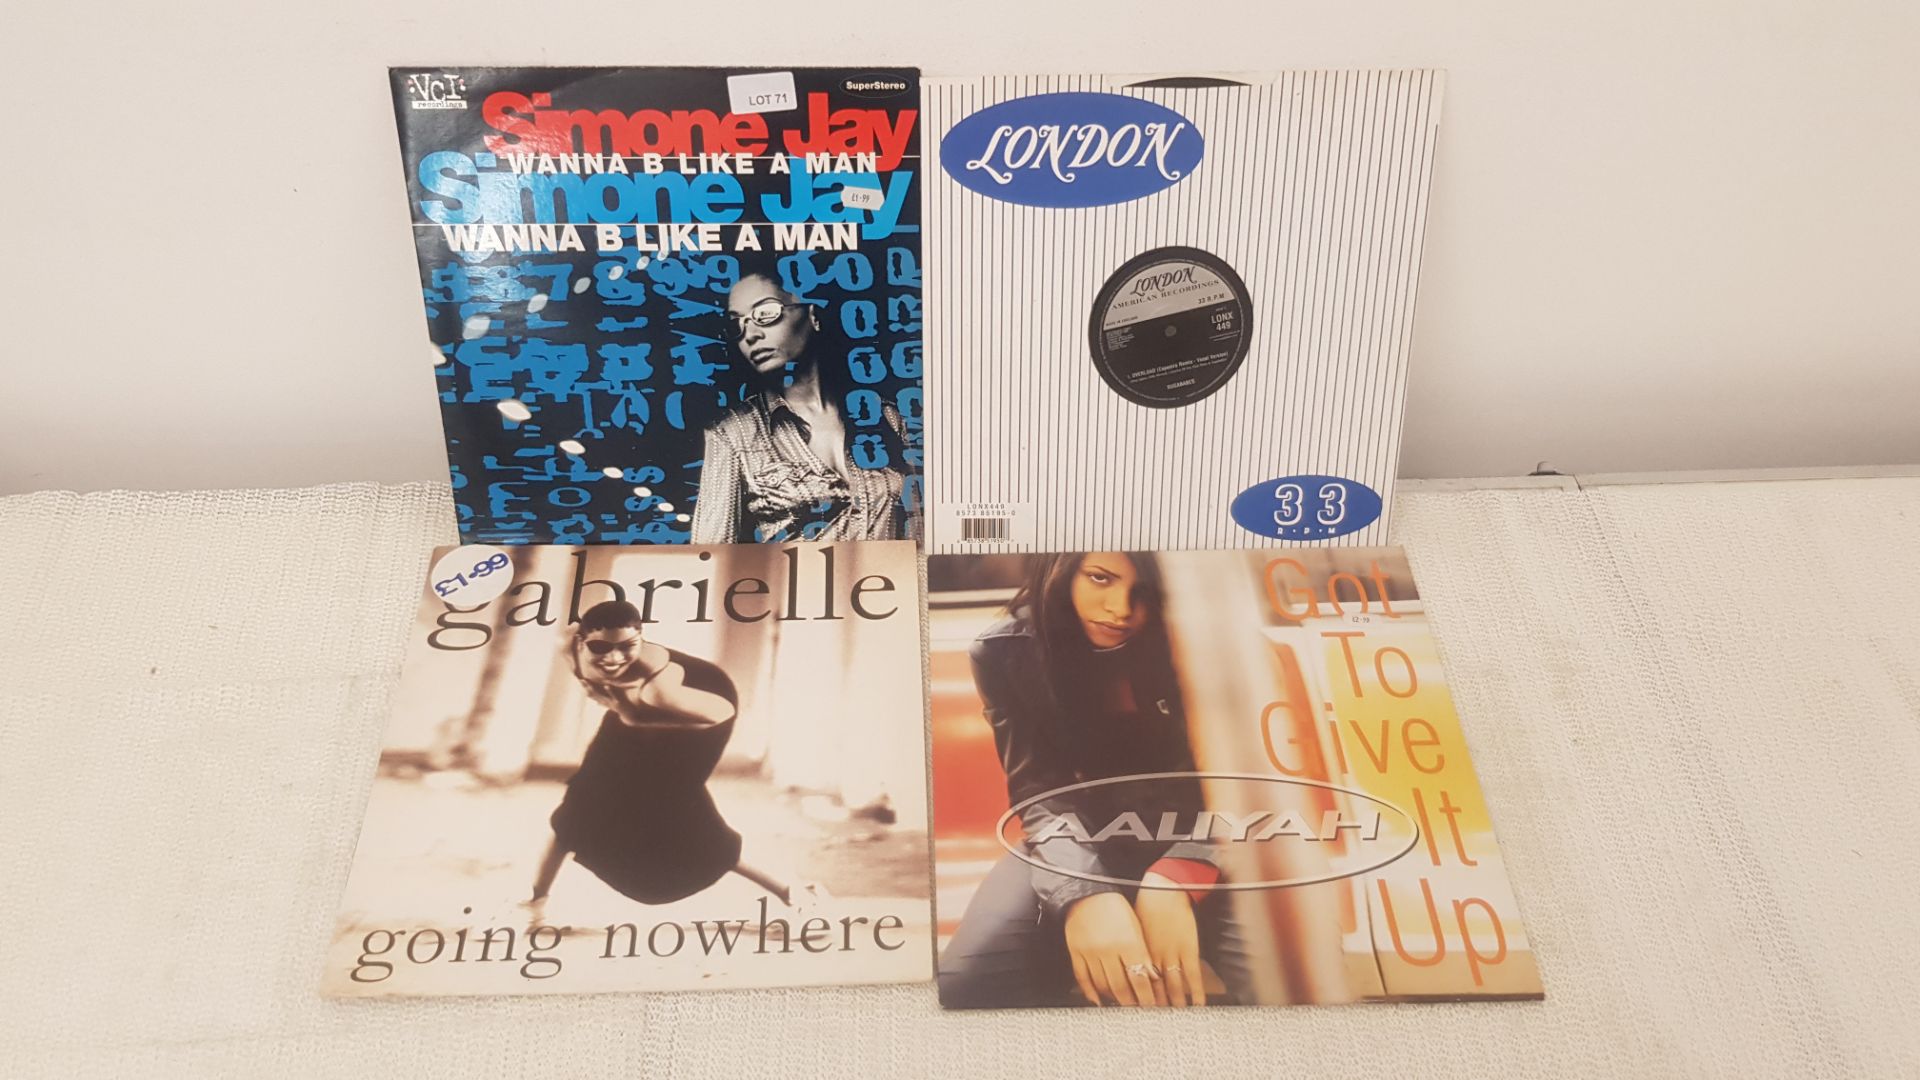 4 X 12" Vinyl. 1 X Simone Jay Wanna B Like A Man, 1 X Sugababes Overload. 1 X Gabrielle Going N